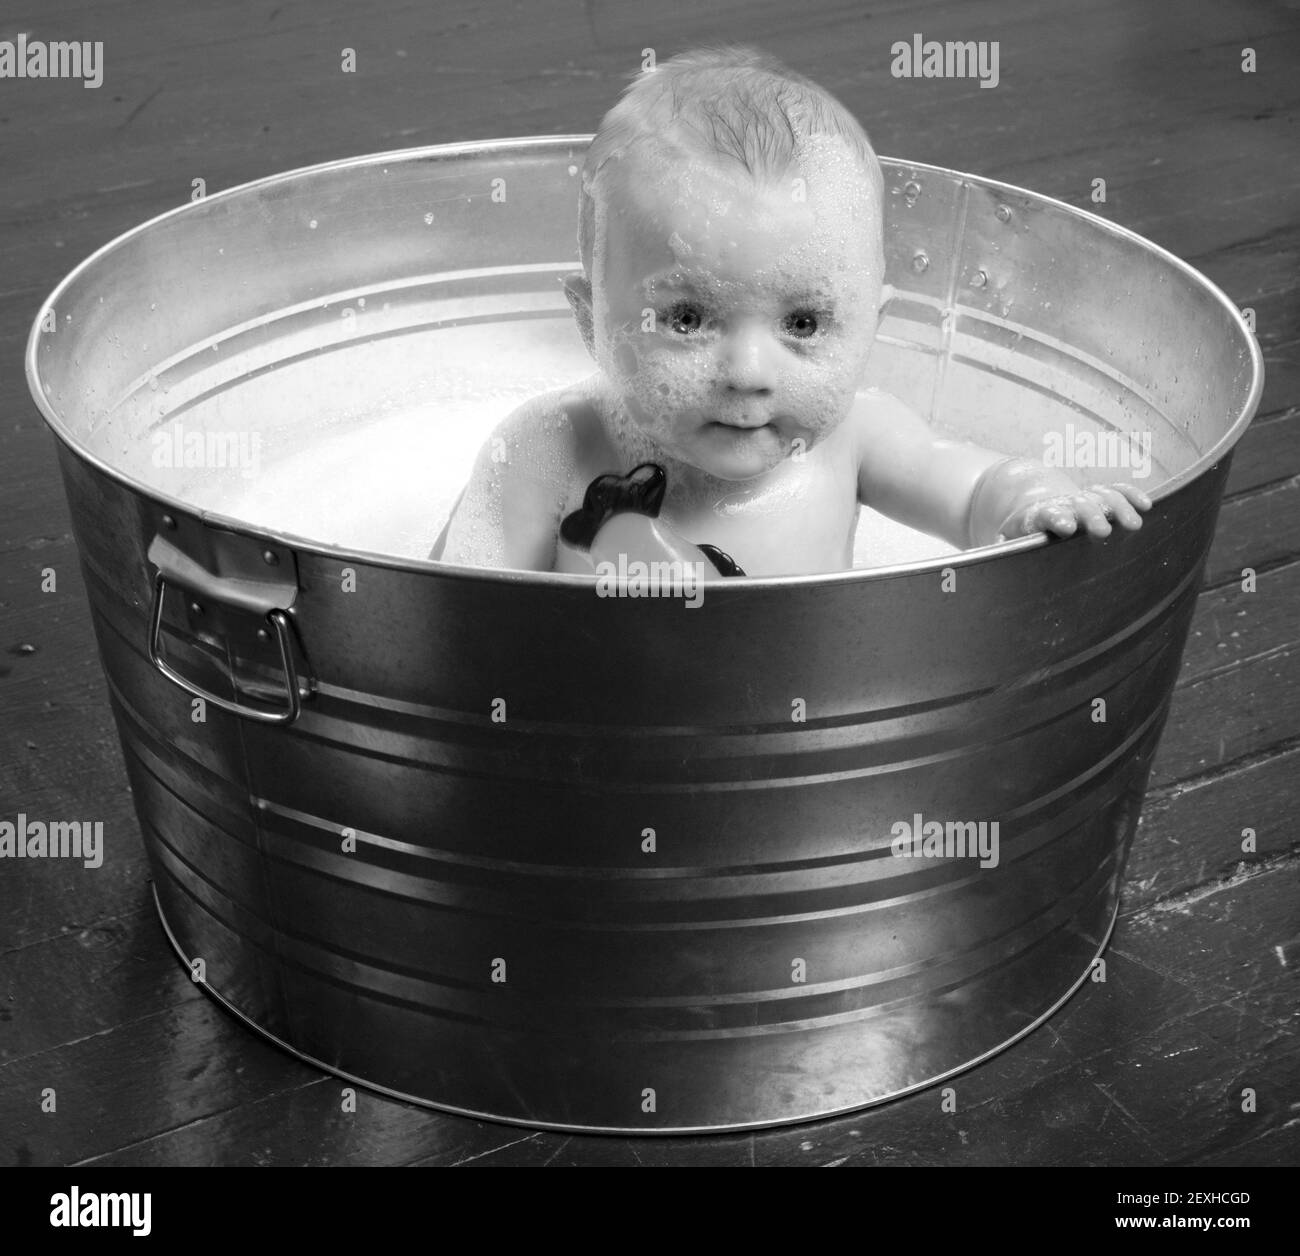 Child bathtime Black and White Stock Photos & Images - Alamy